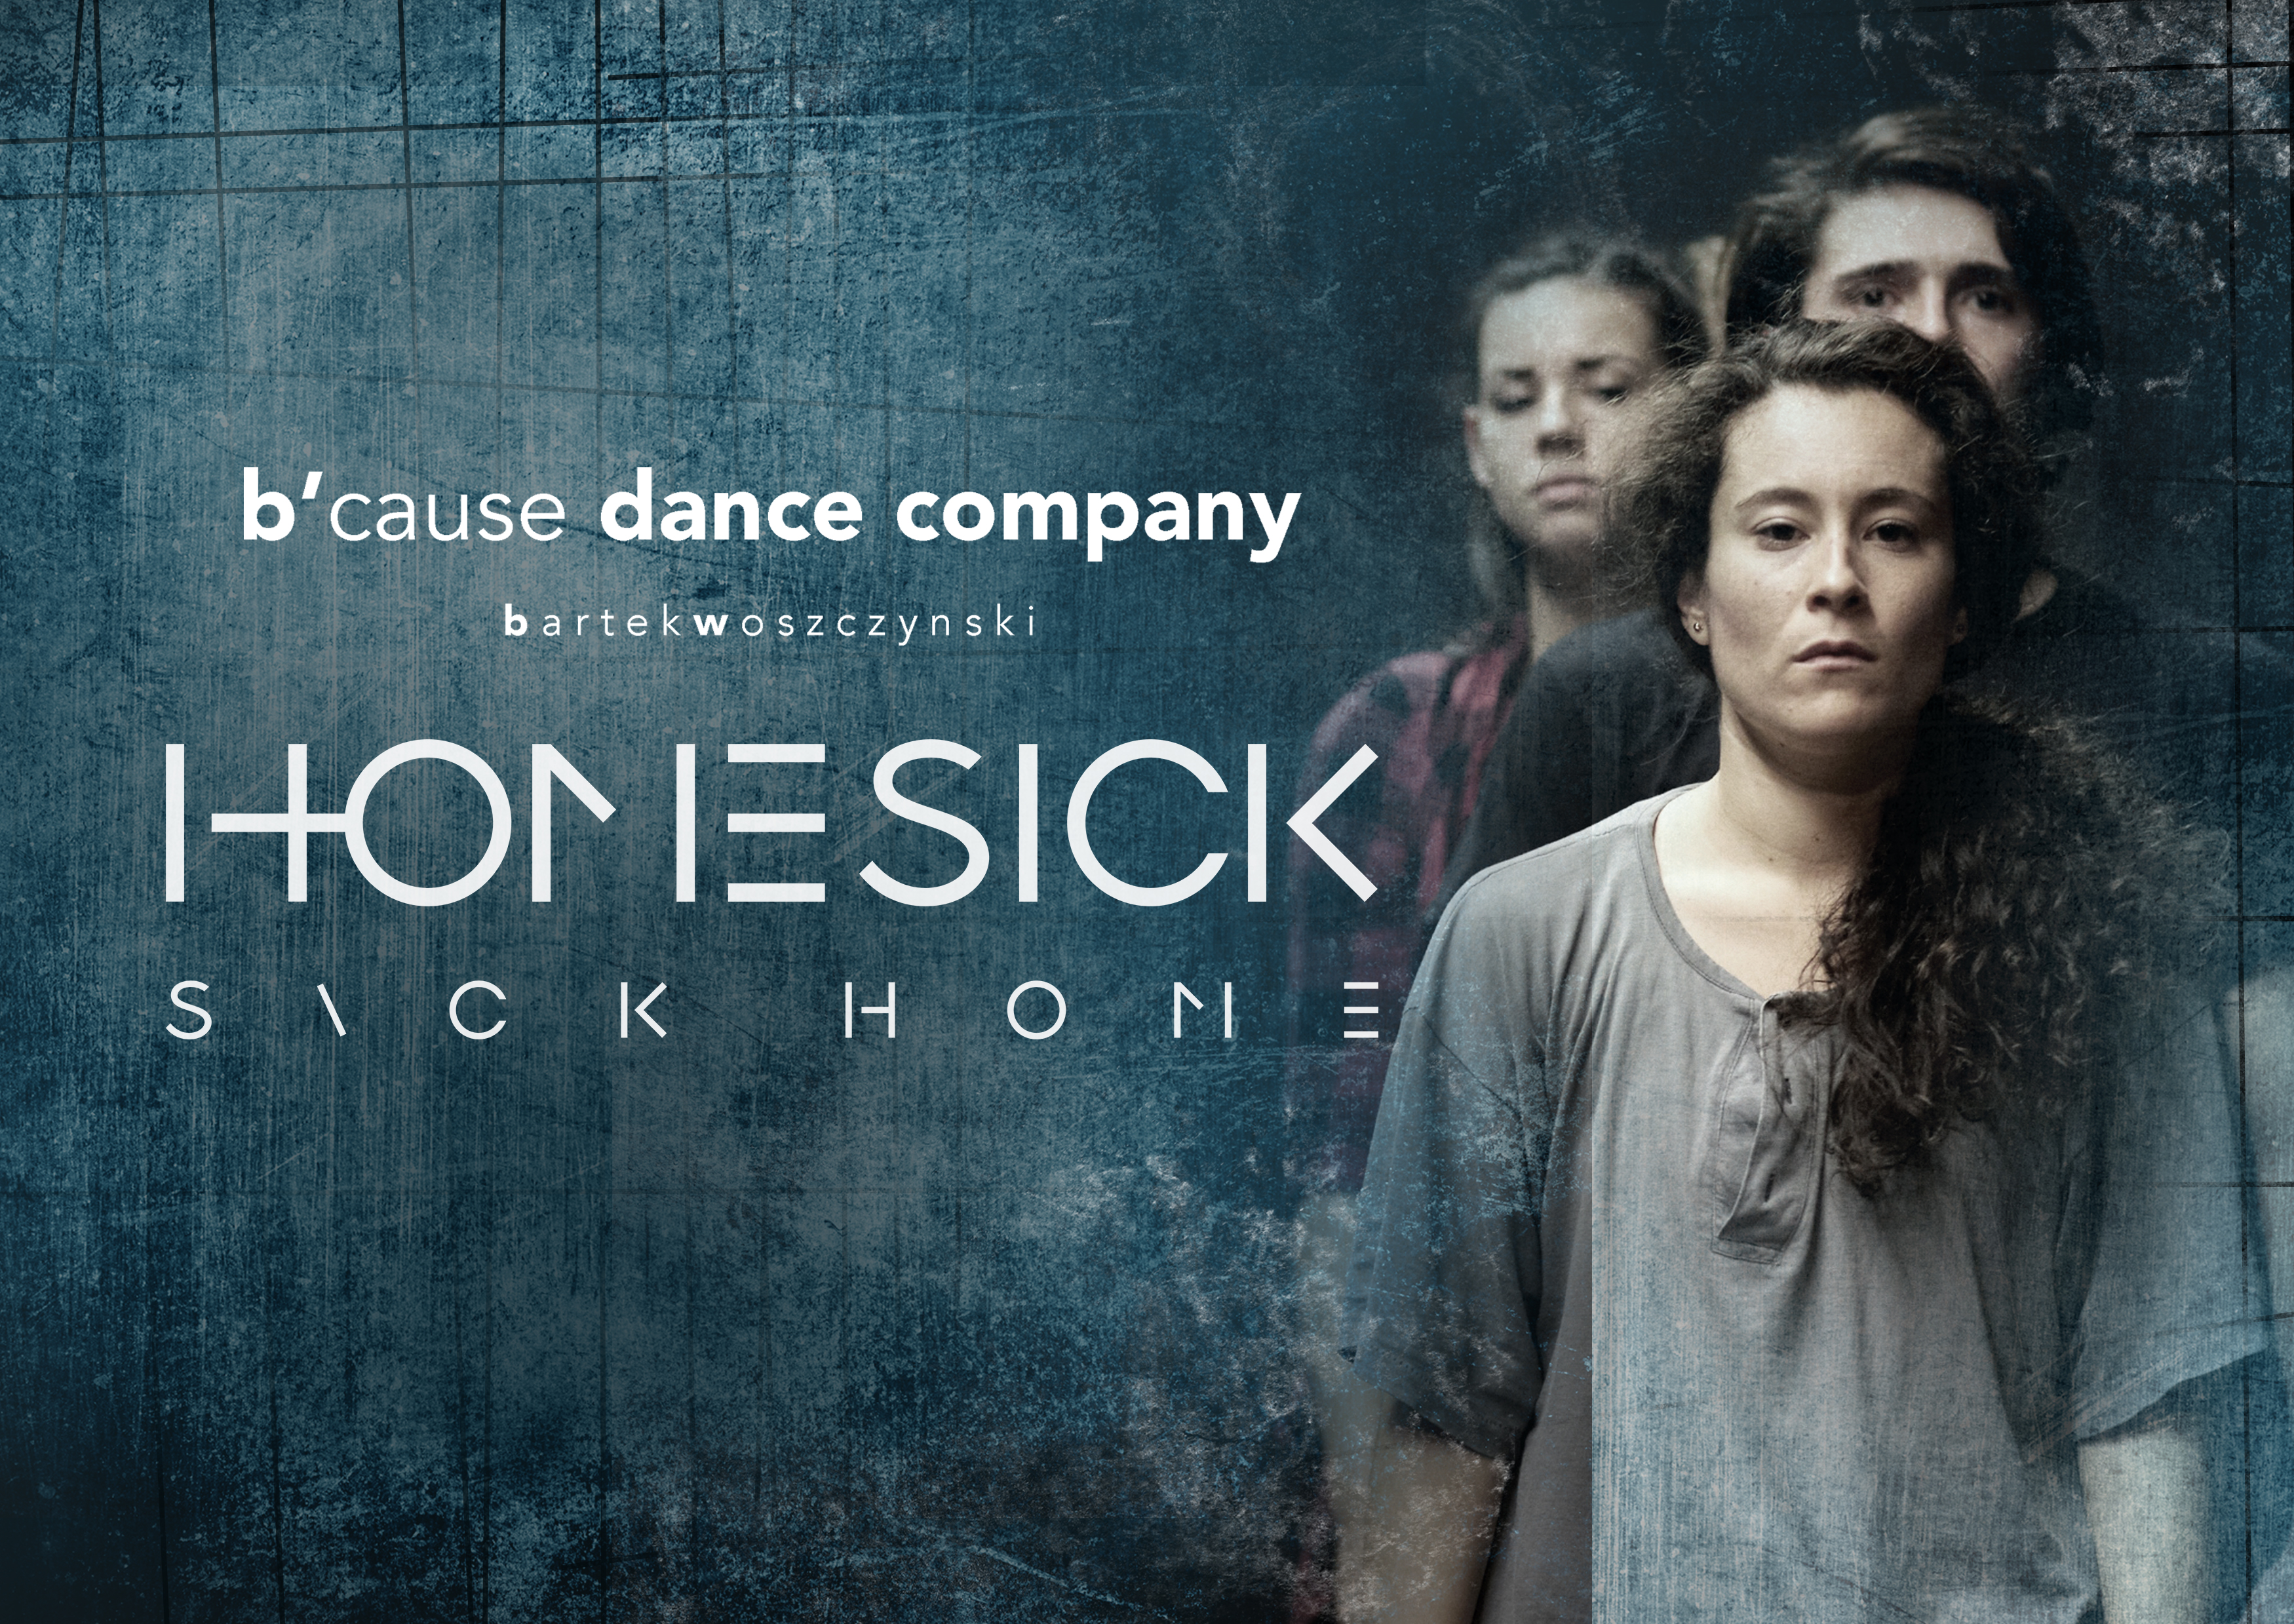 Homesick - sick home 1